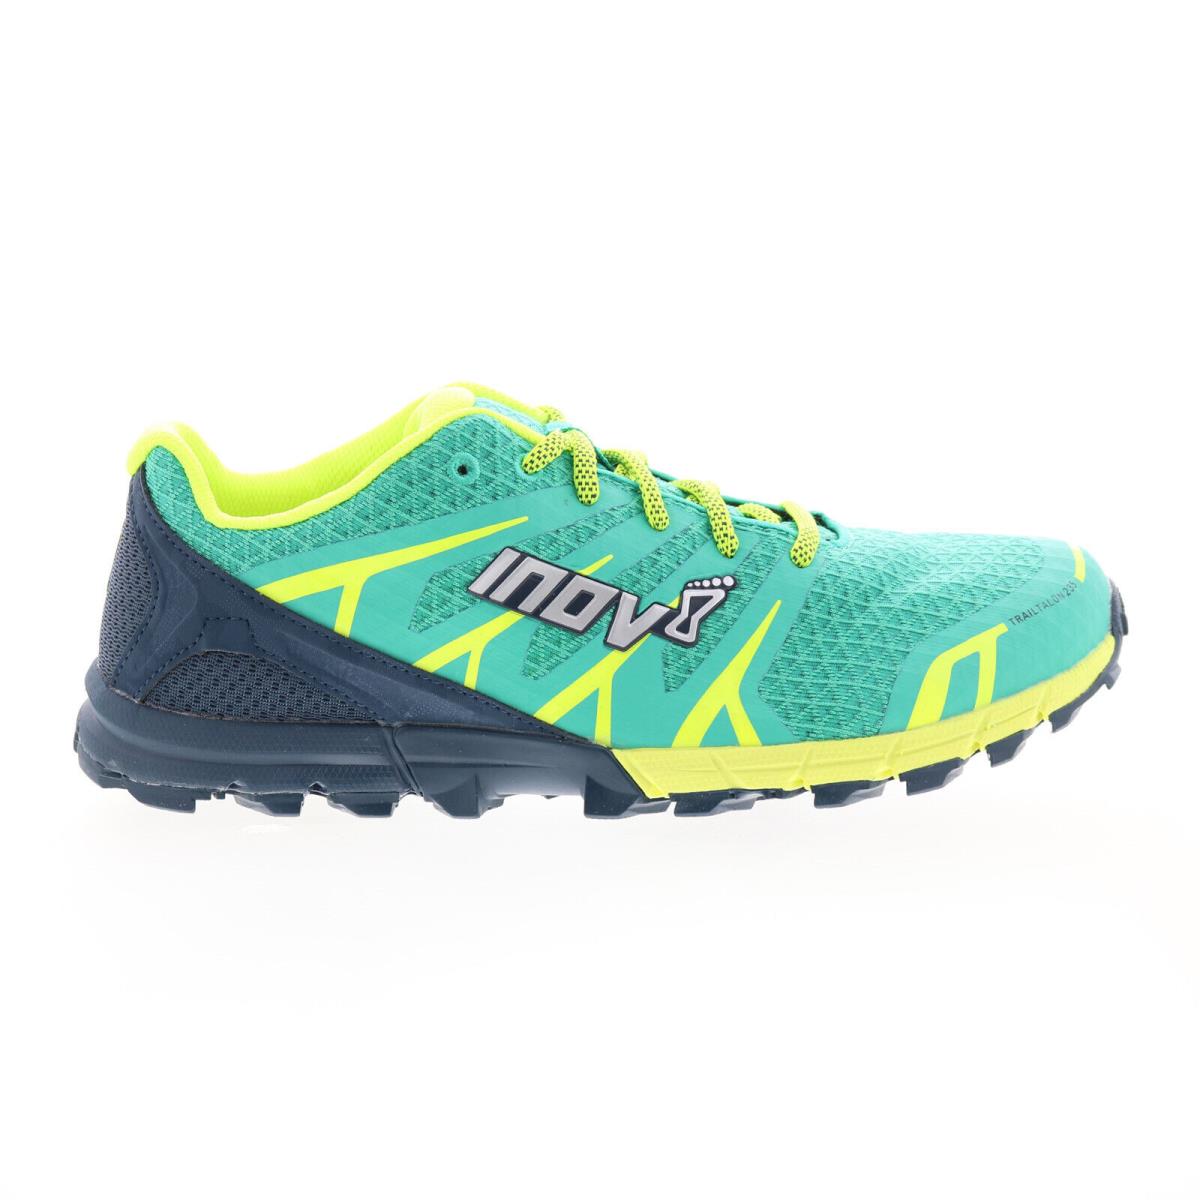 Inov-8 Trailtalon 235 000715-TLNYYW Womens Green Athletic Hiking Shoes